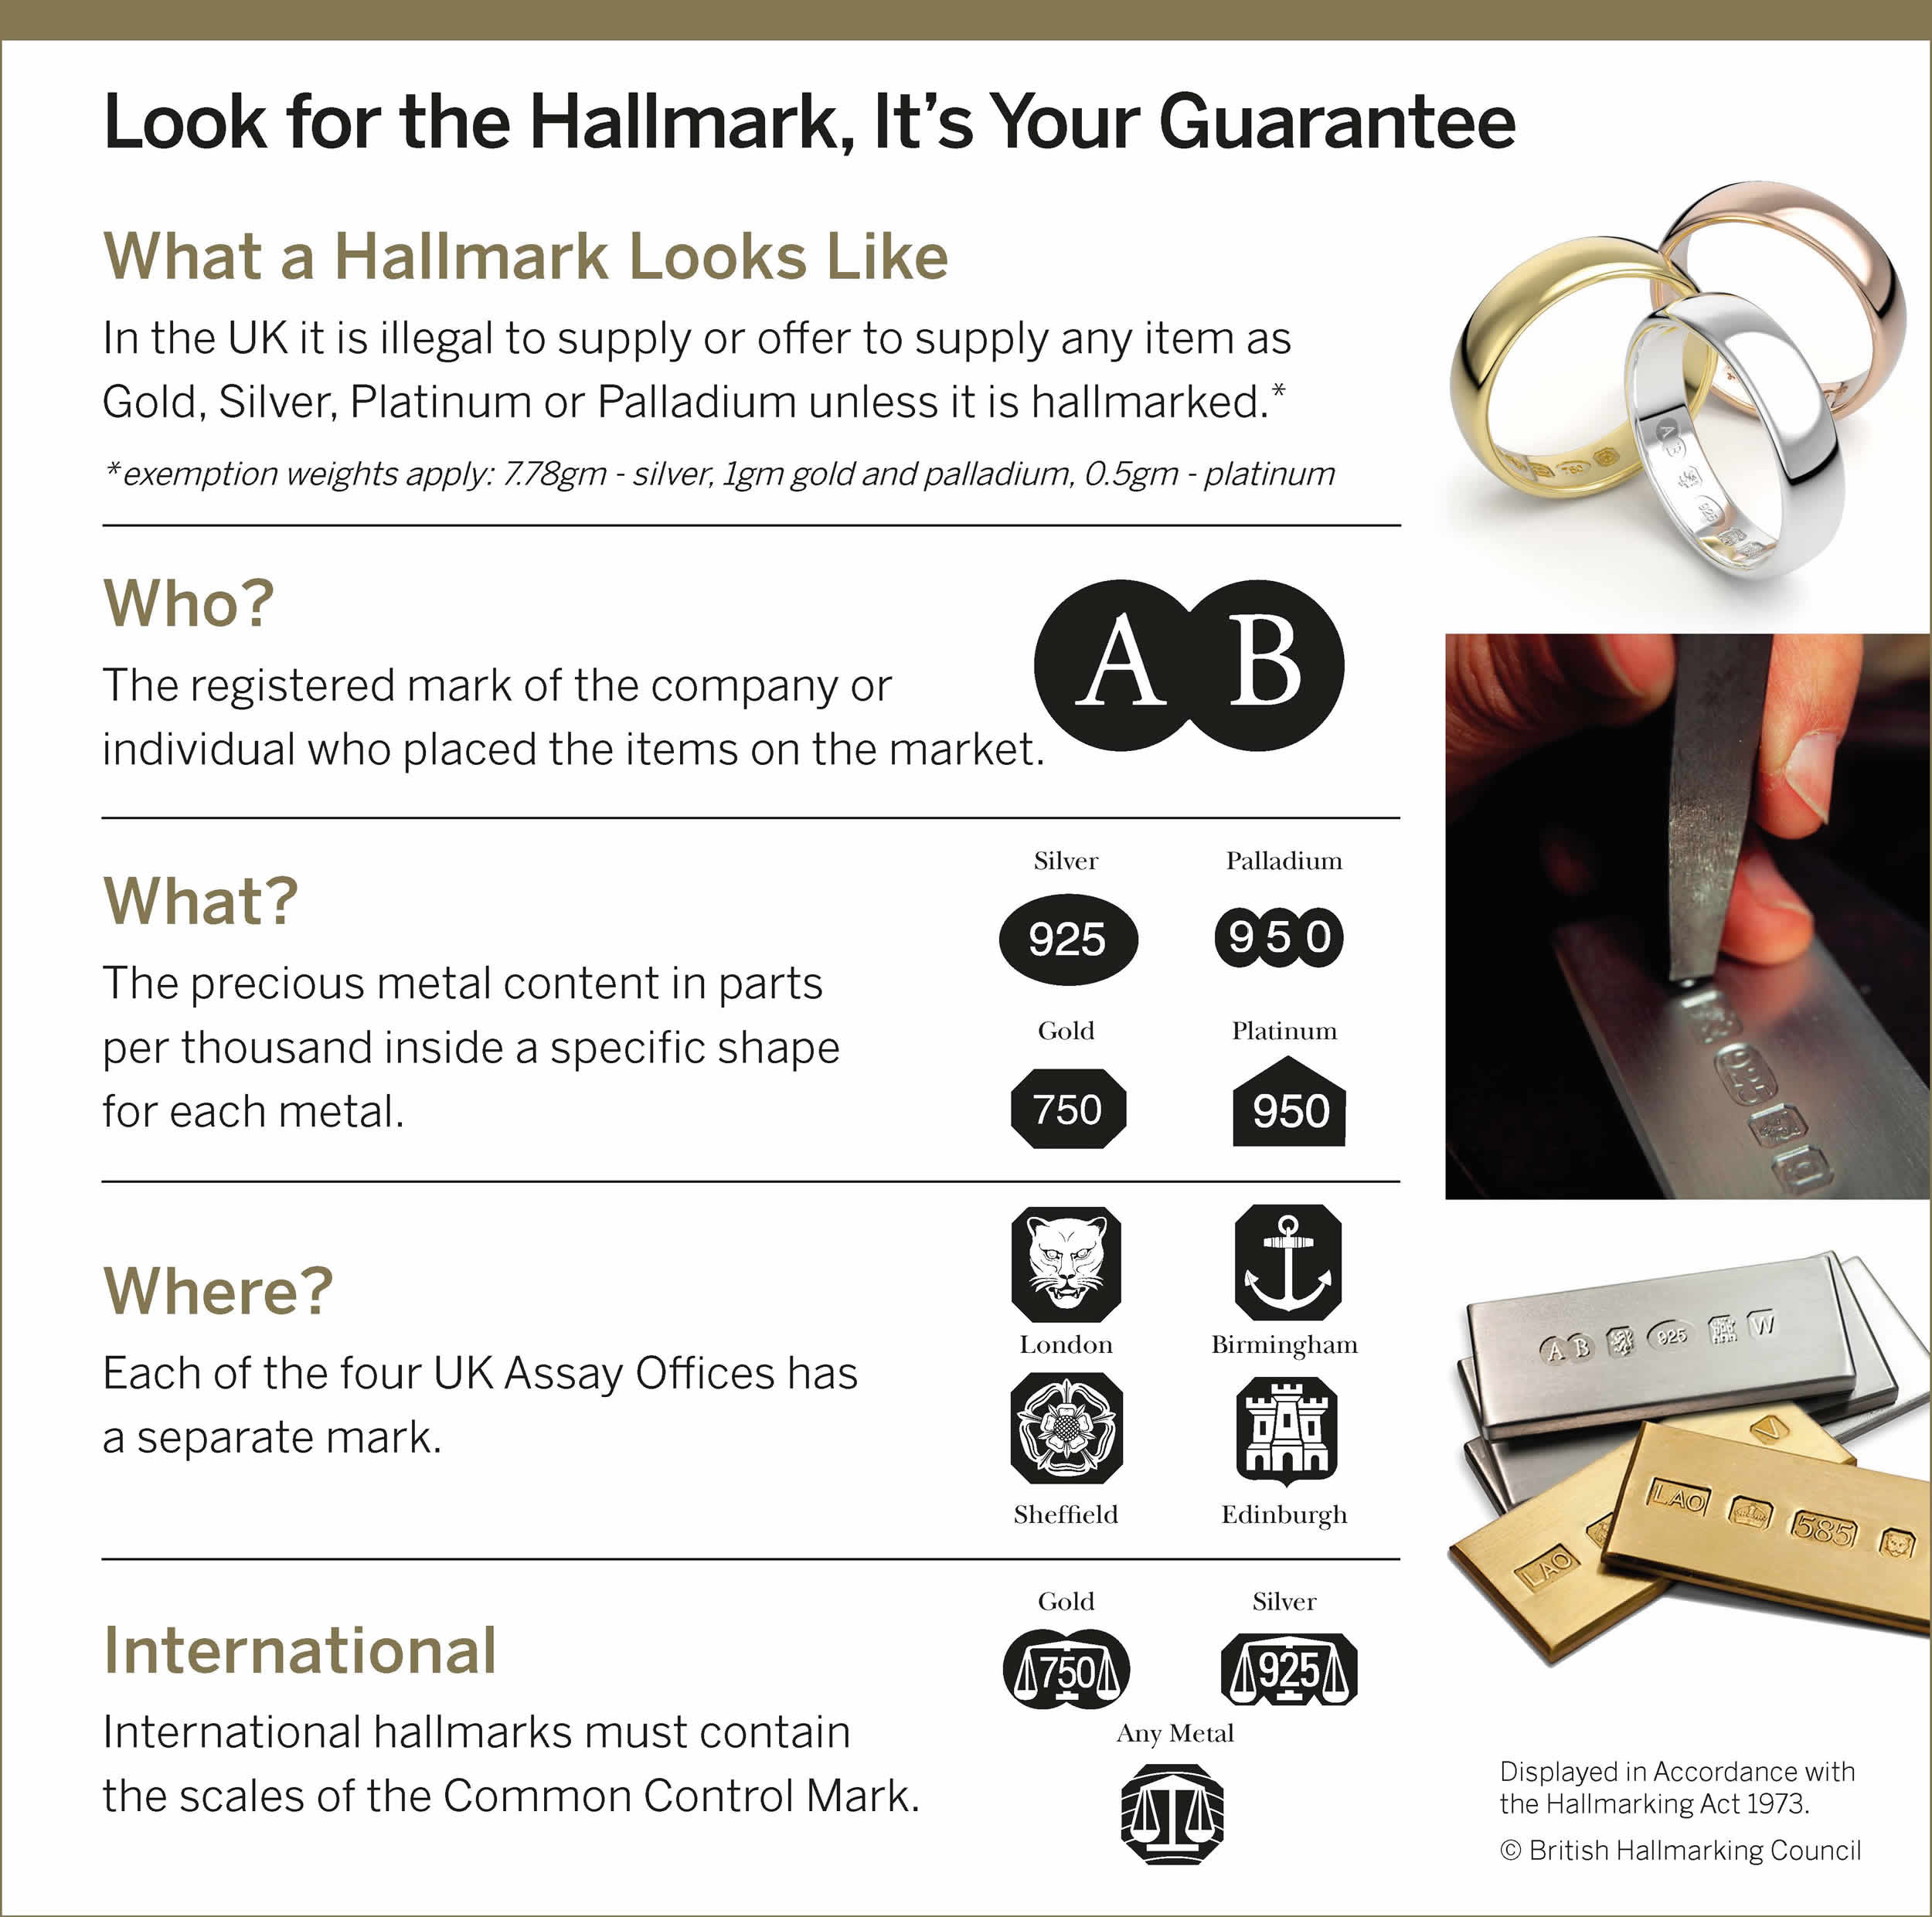 Dealer's Notice from Edinburgh Assay Office explaining Hallmark requirements for precious metals